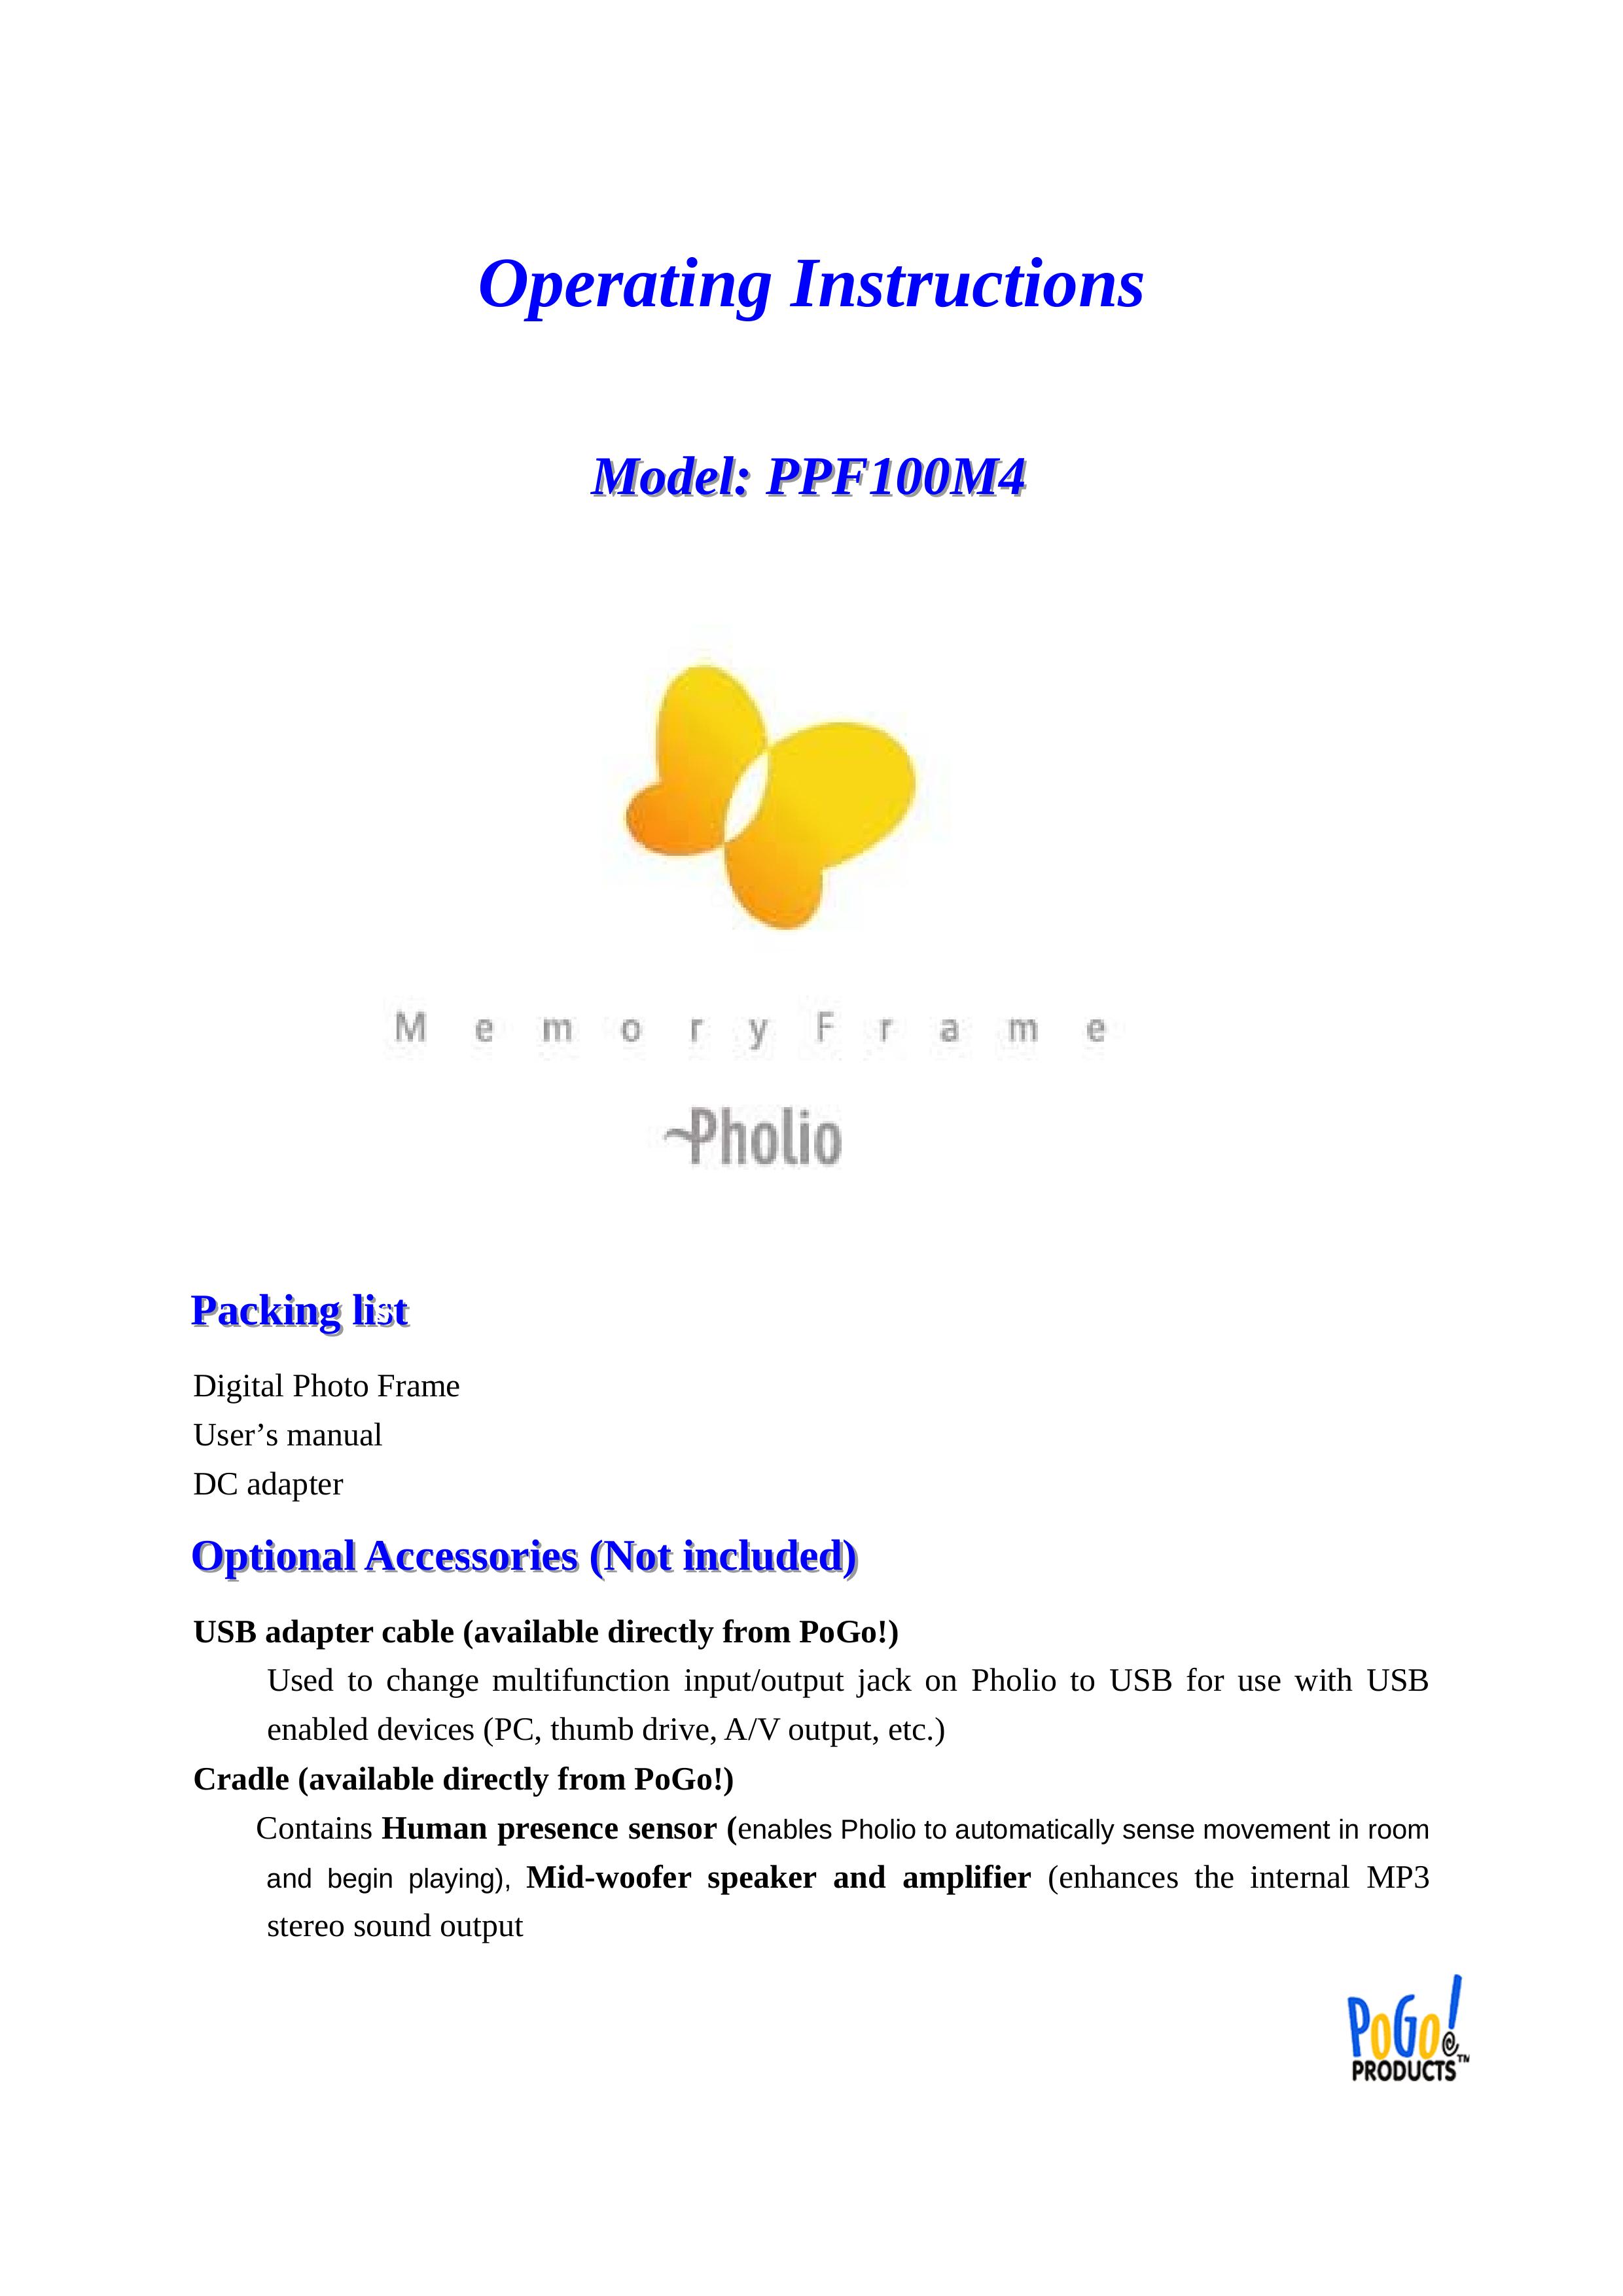 PoGo Products PPF100M4 Digital Photo Frame User Manual